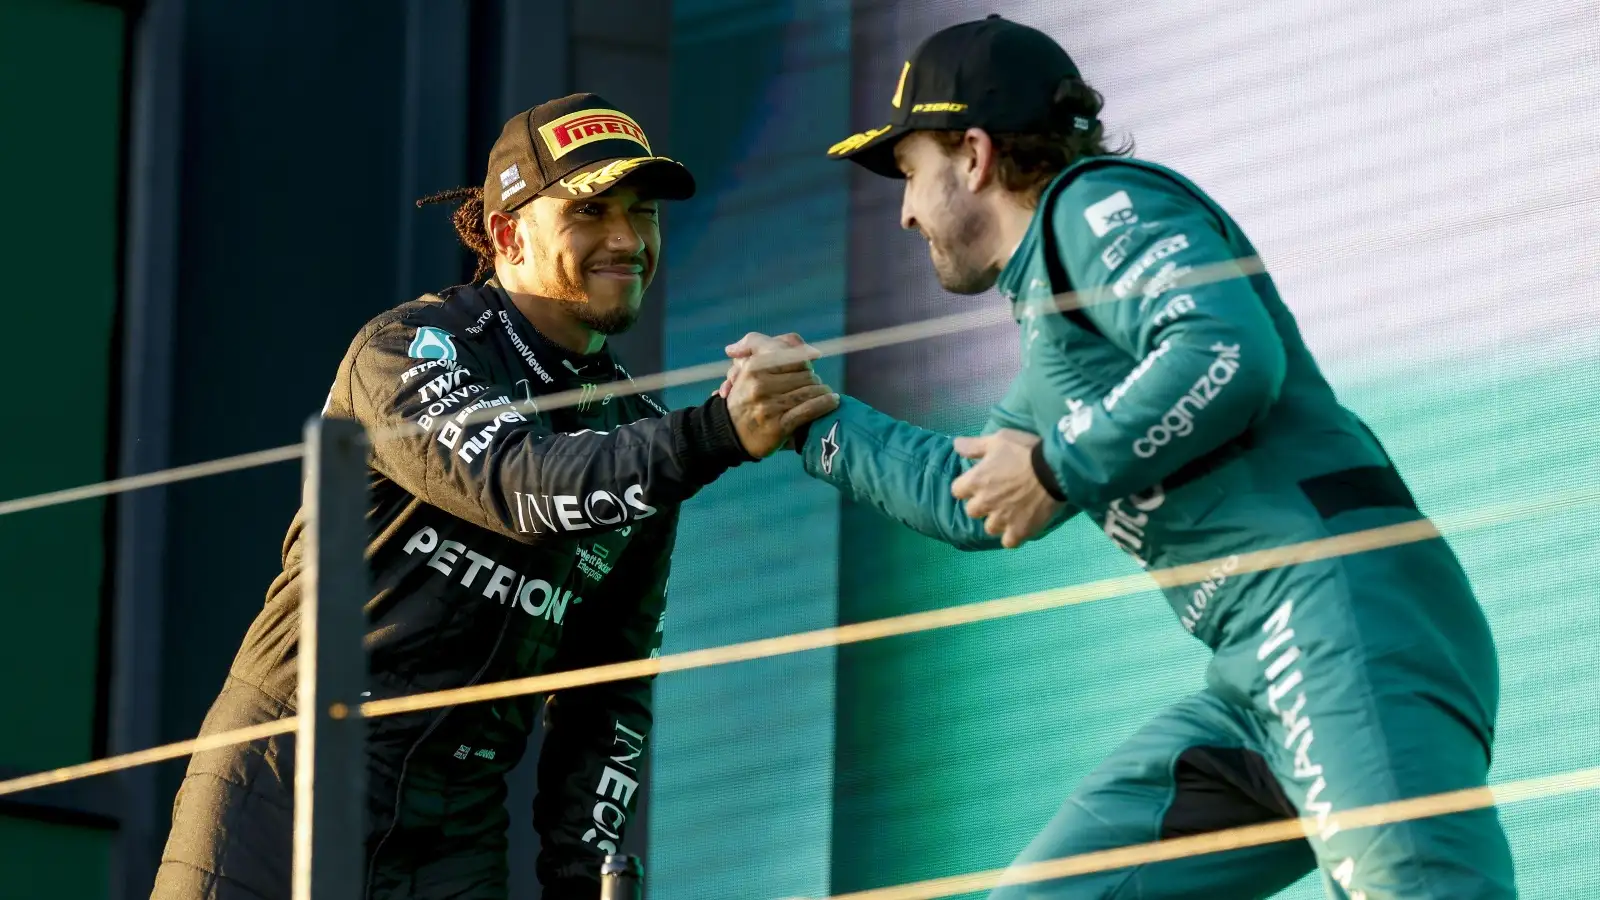 Lewis Hamilton and Fernando Alonso handshake on the podium.